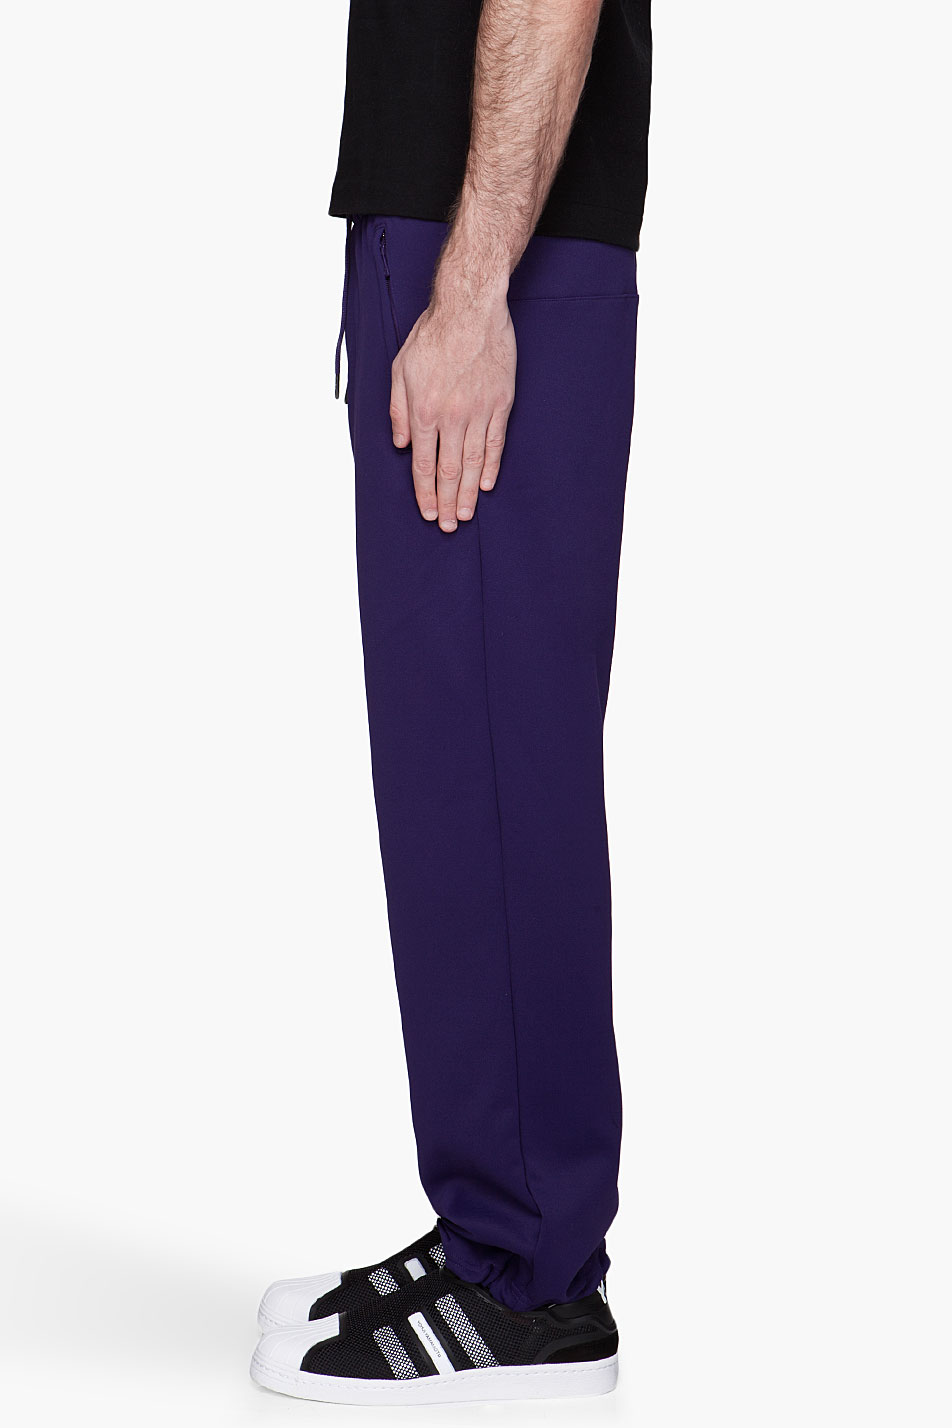 Y-3 Purple Track Pants for Men - Lyst